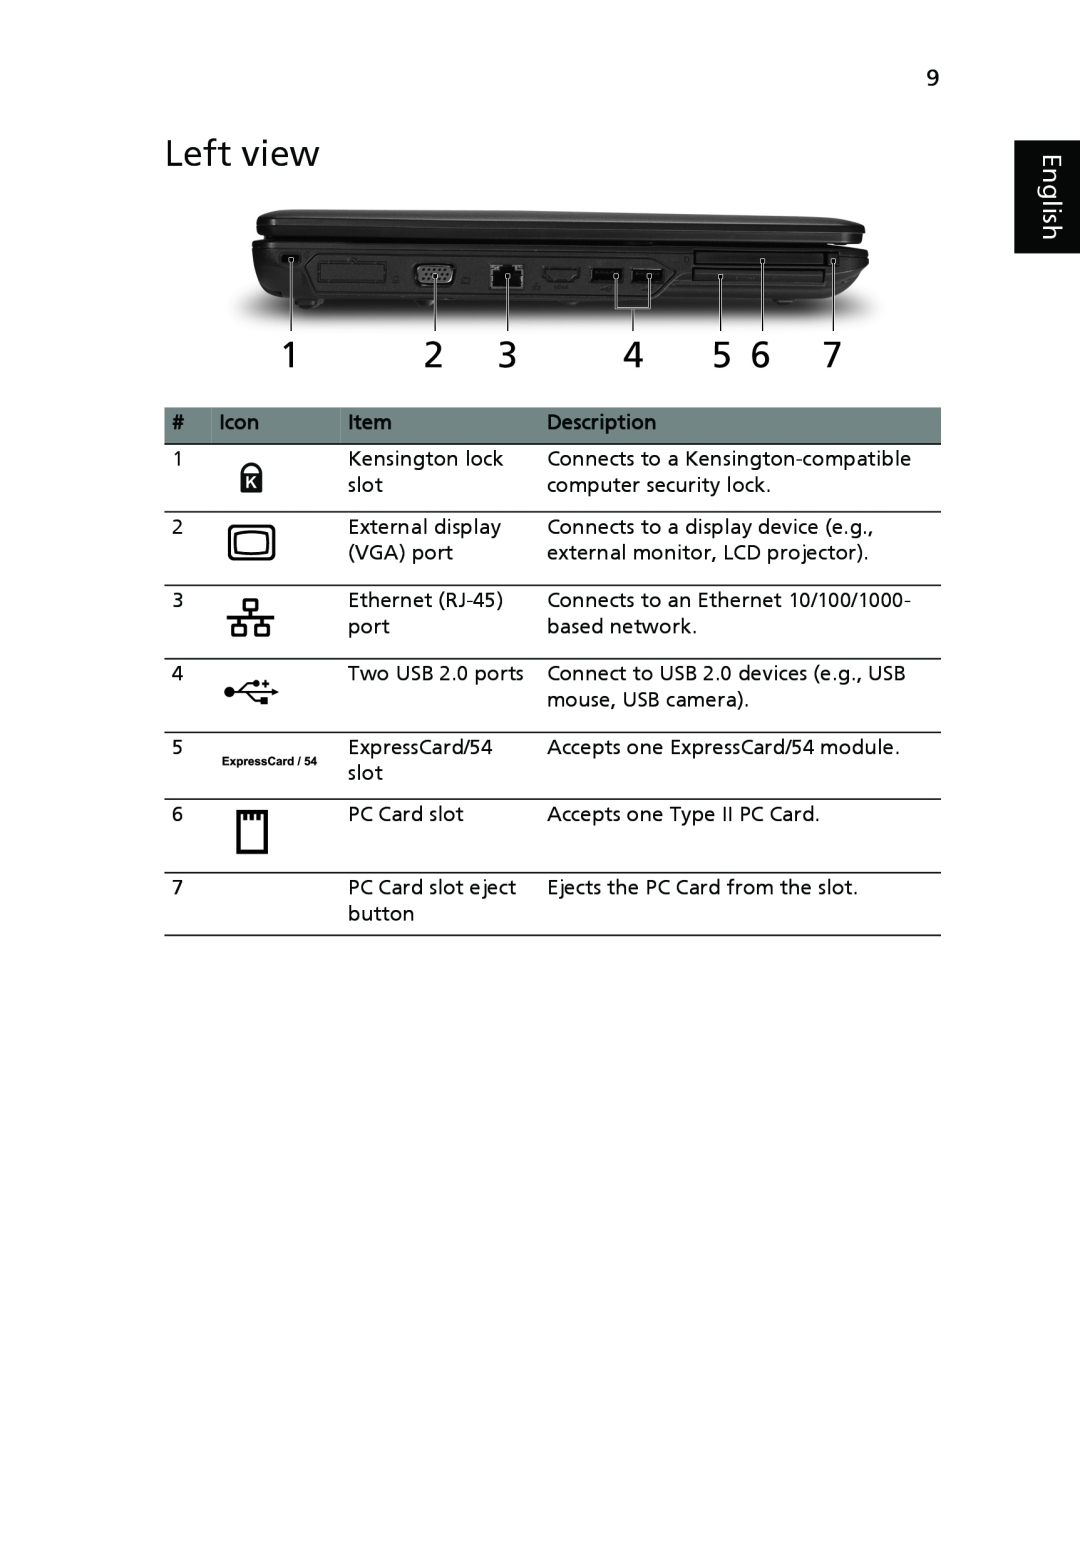 Acer 5230 Series, 5630Z SERIES manual Left view, English, Description, Icon 